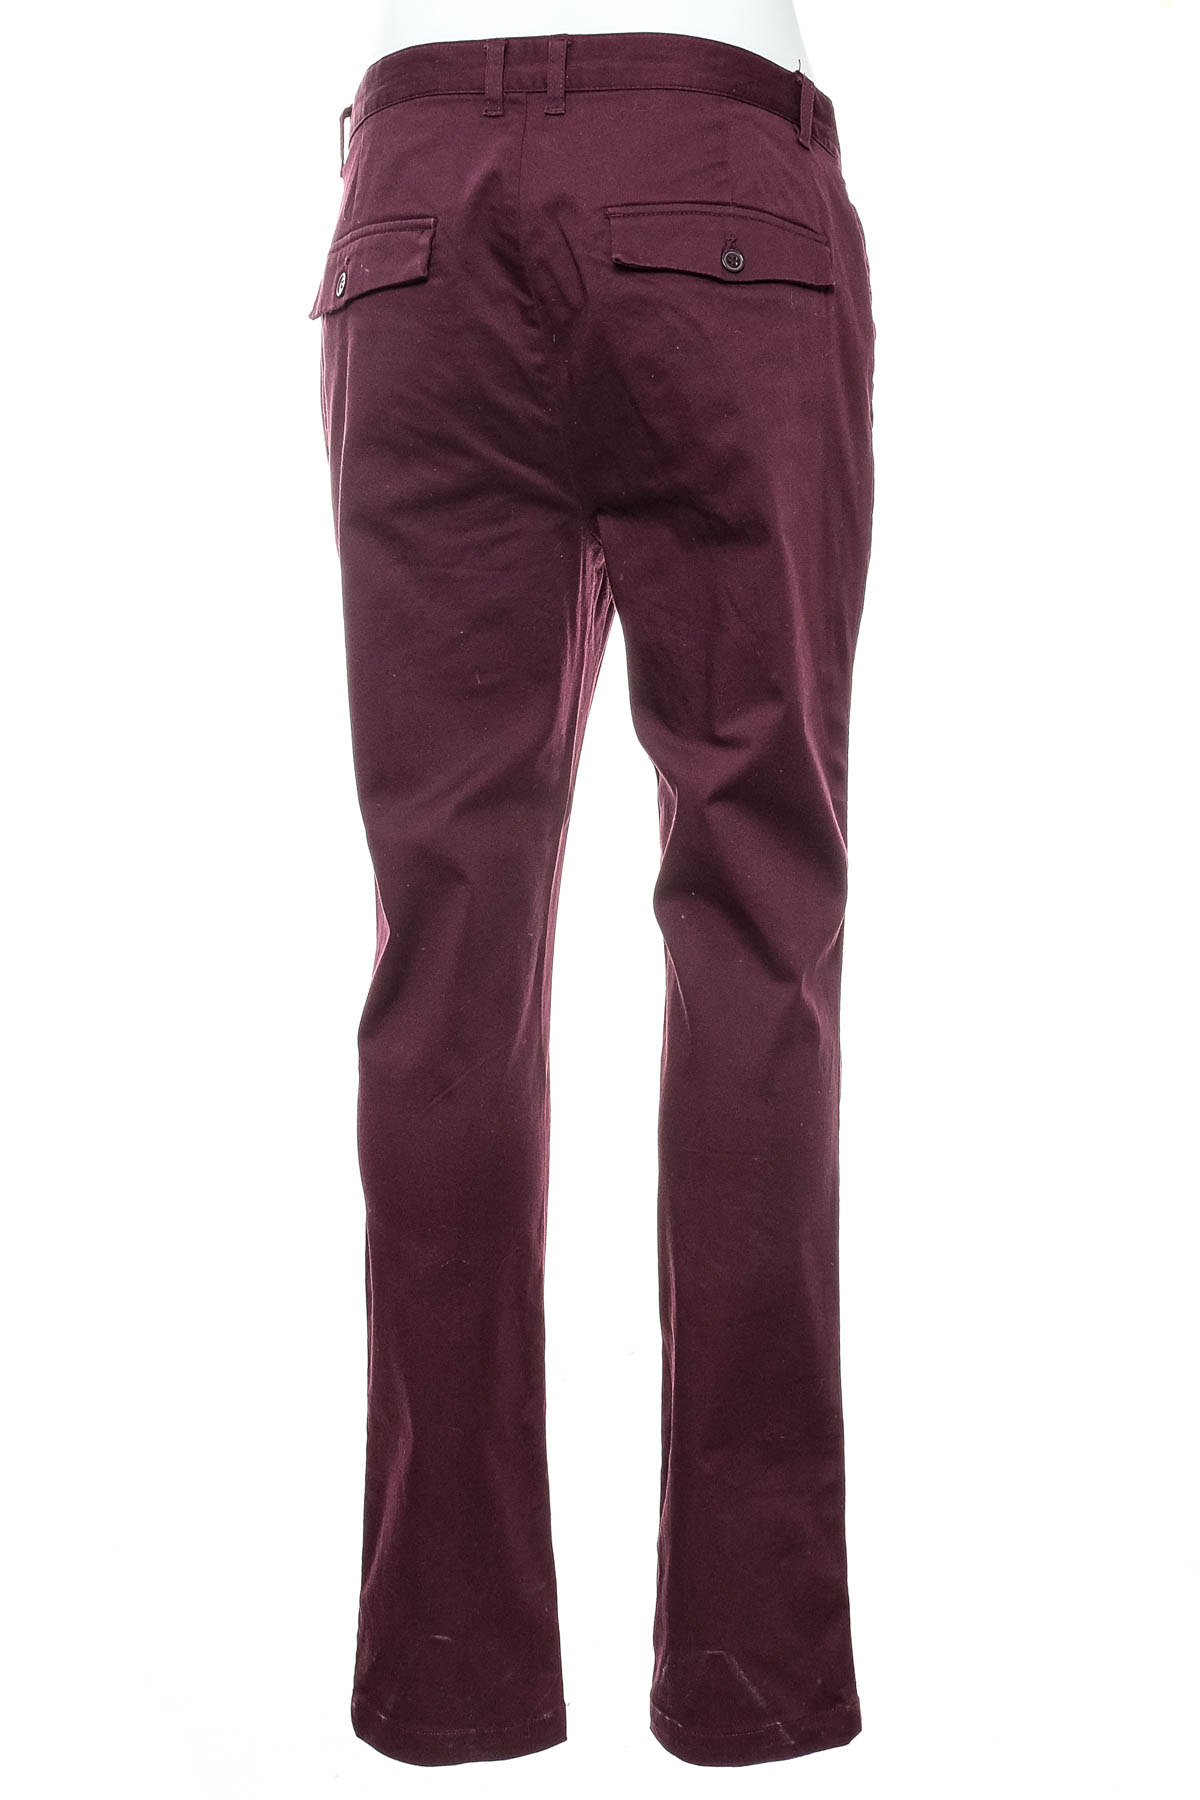 Pantalon pentru bărbați - KIABI - 1